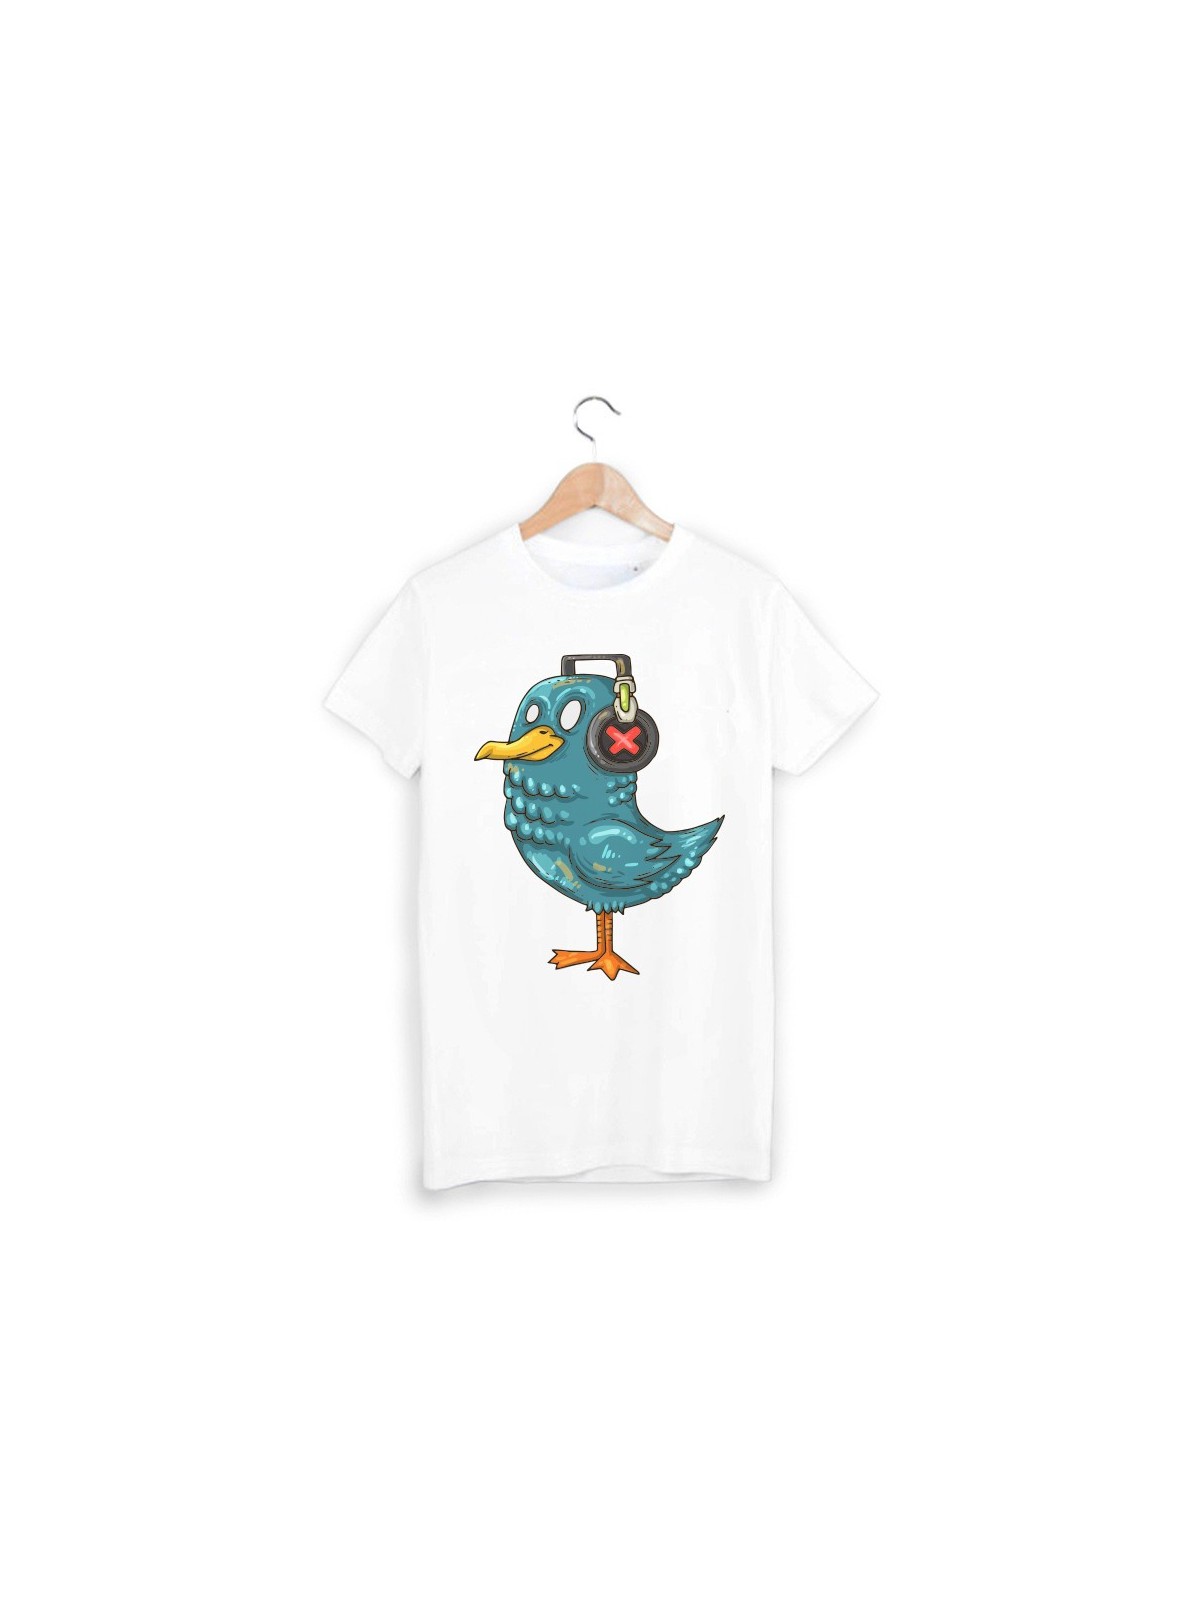 T-Shirt oiseau ref 997